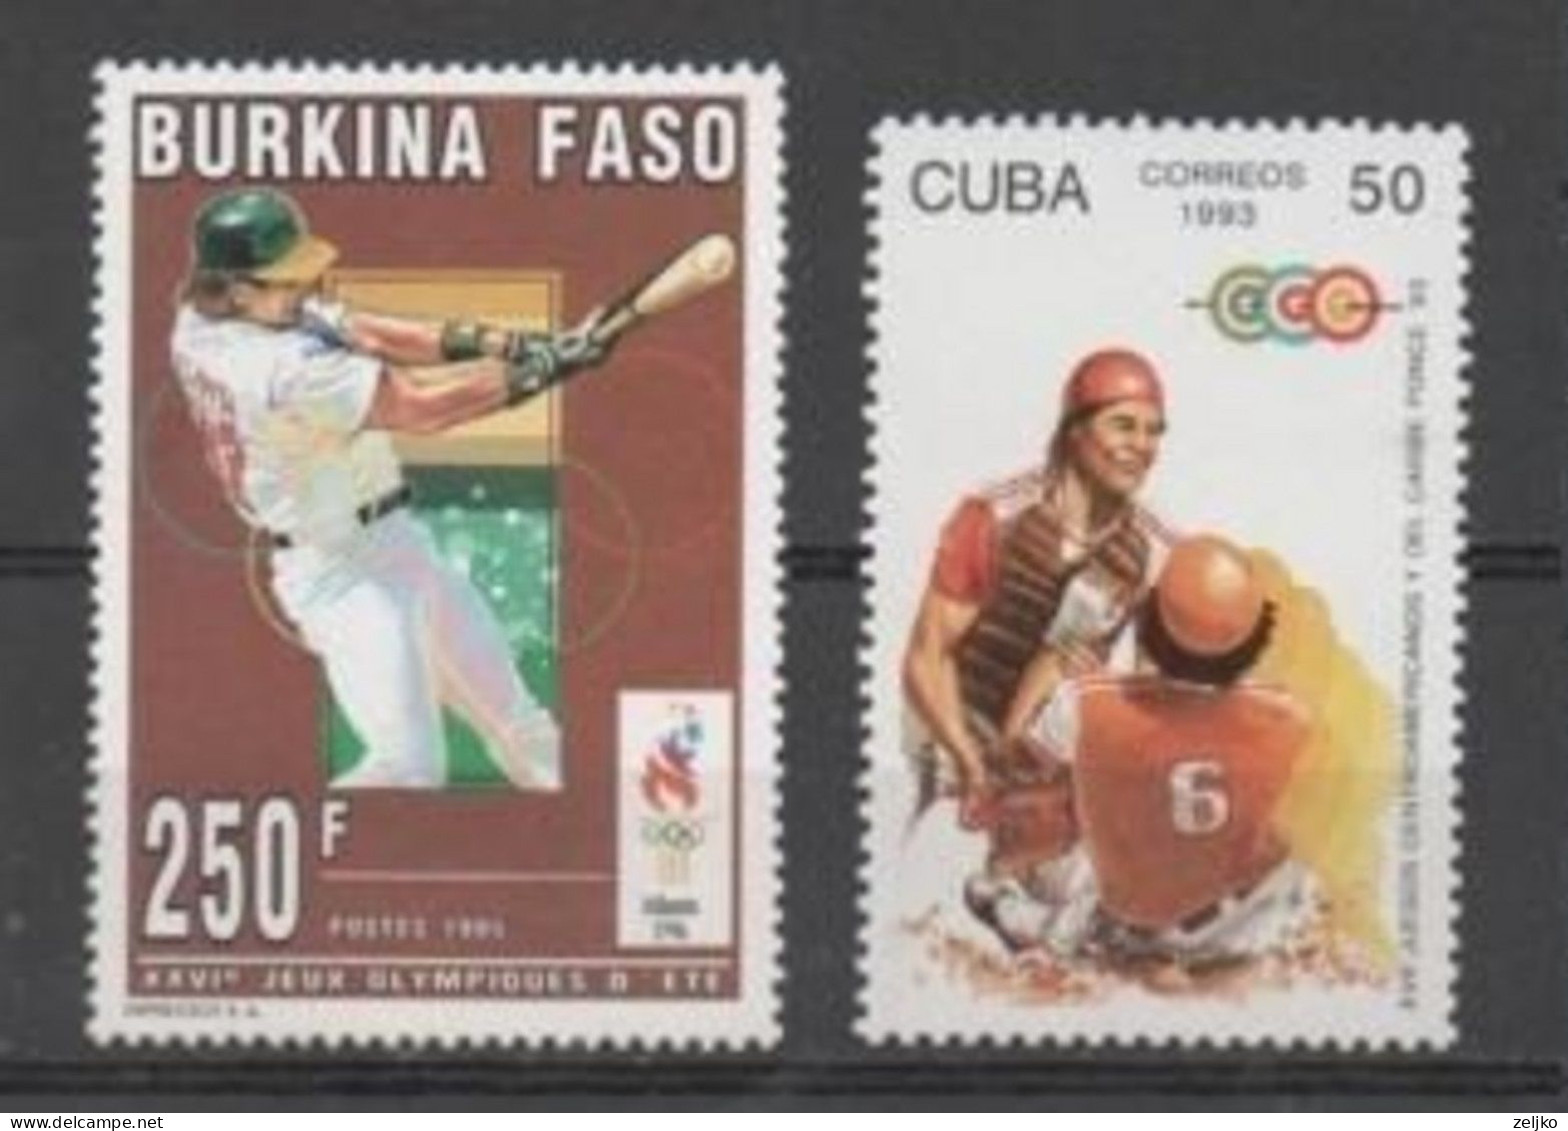 Baseball, MNH, Burkina Faso, Atlanta 1996 And Cuba 1993 - Béisbol